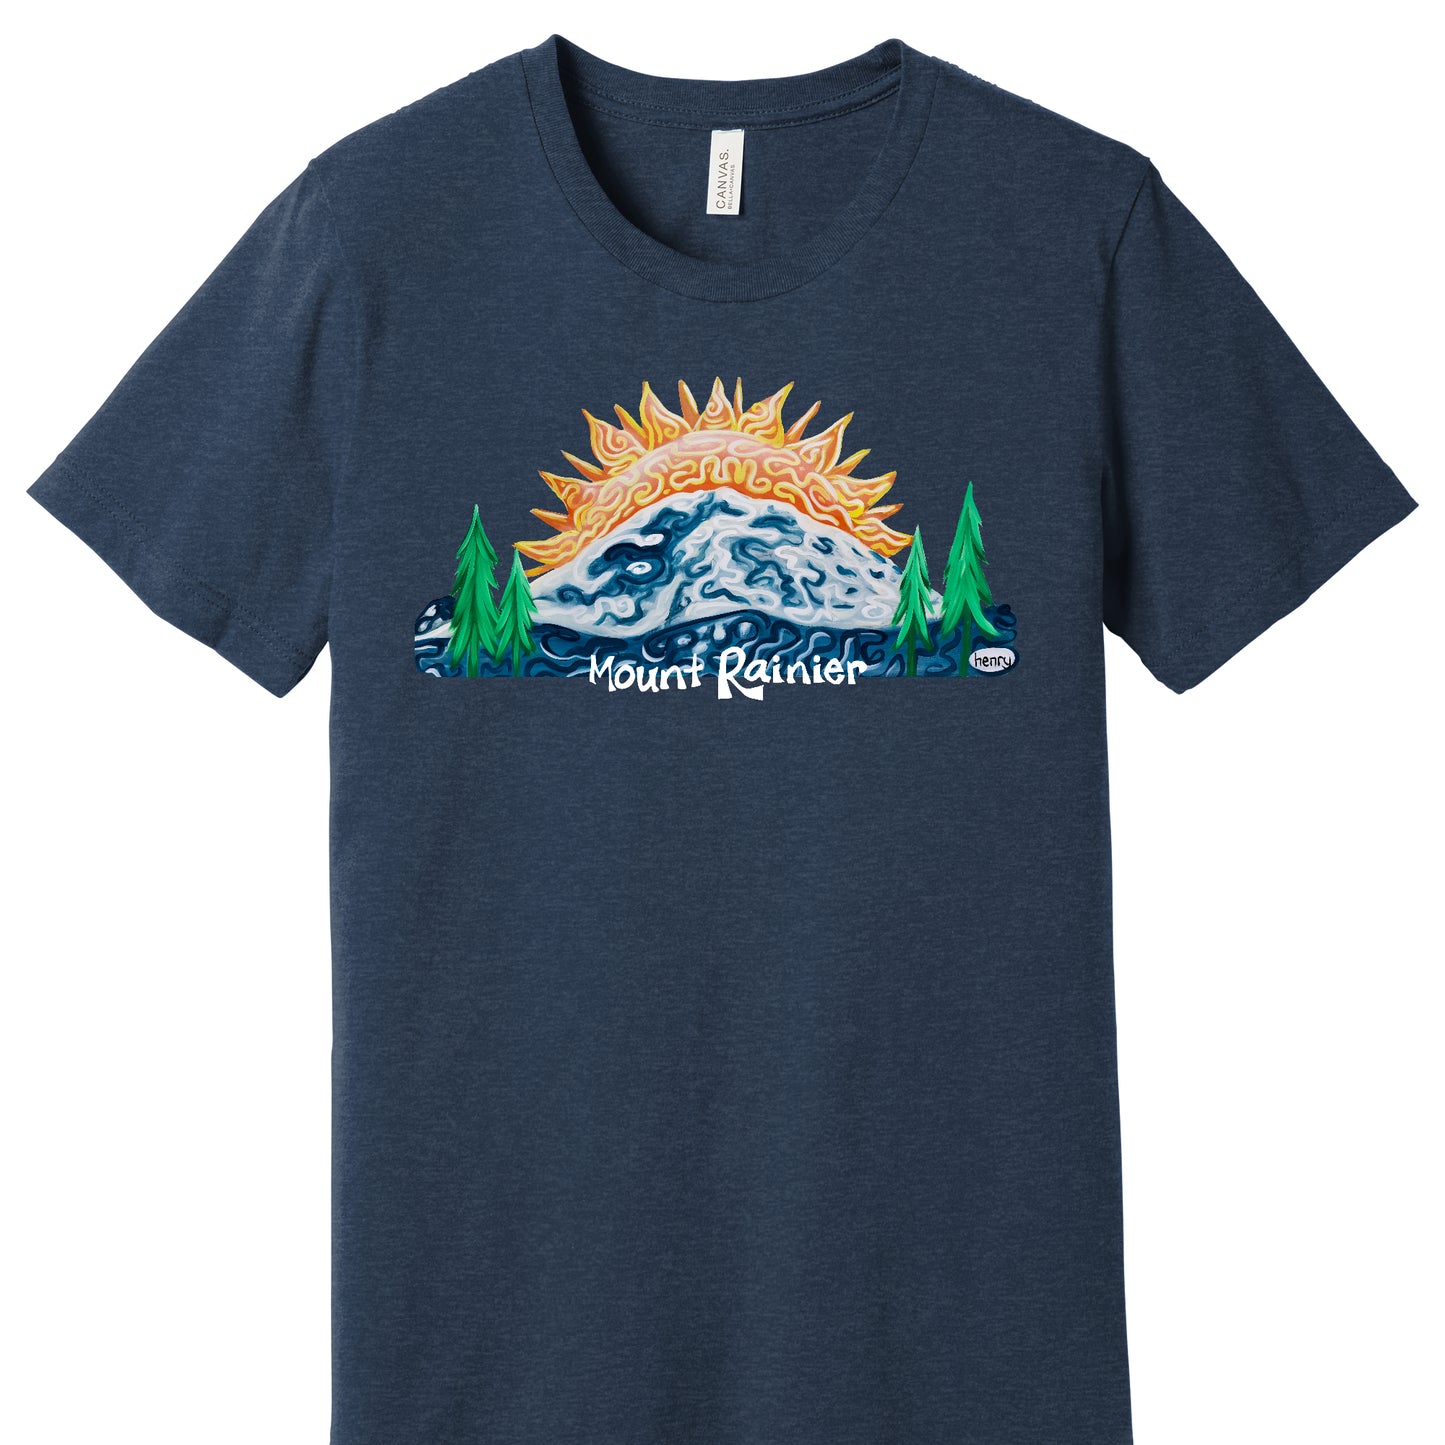 Mount Rainier Sunrise Unisex Heathered Navy T-Shirt | Wearable Art by Seattle Mural Artist Ryan "Henry" Ward